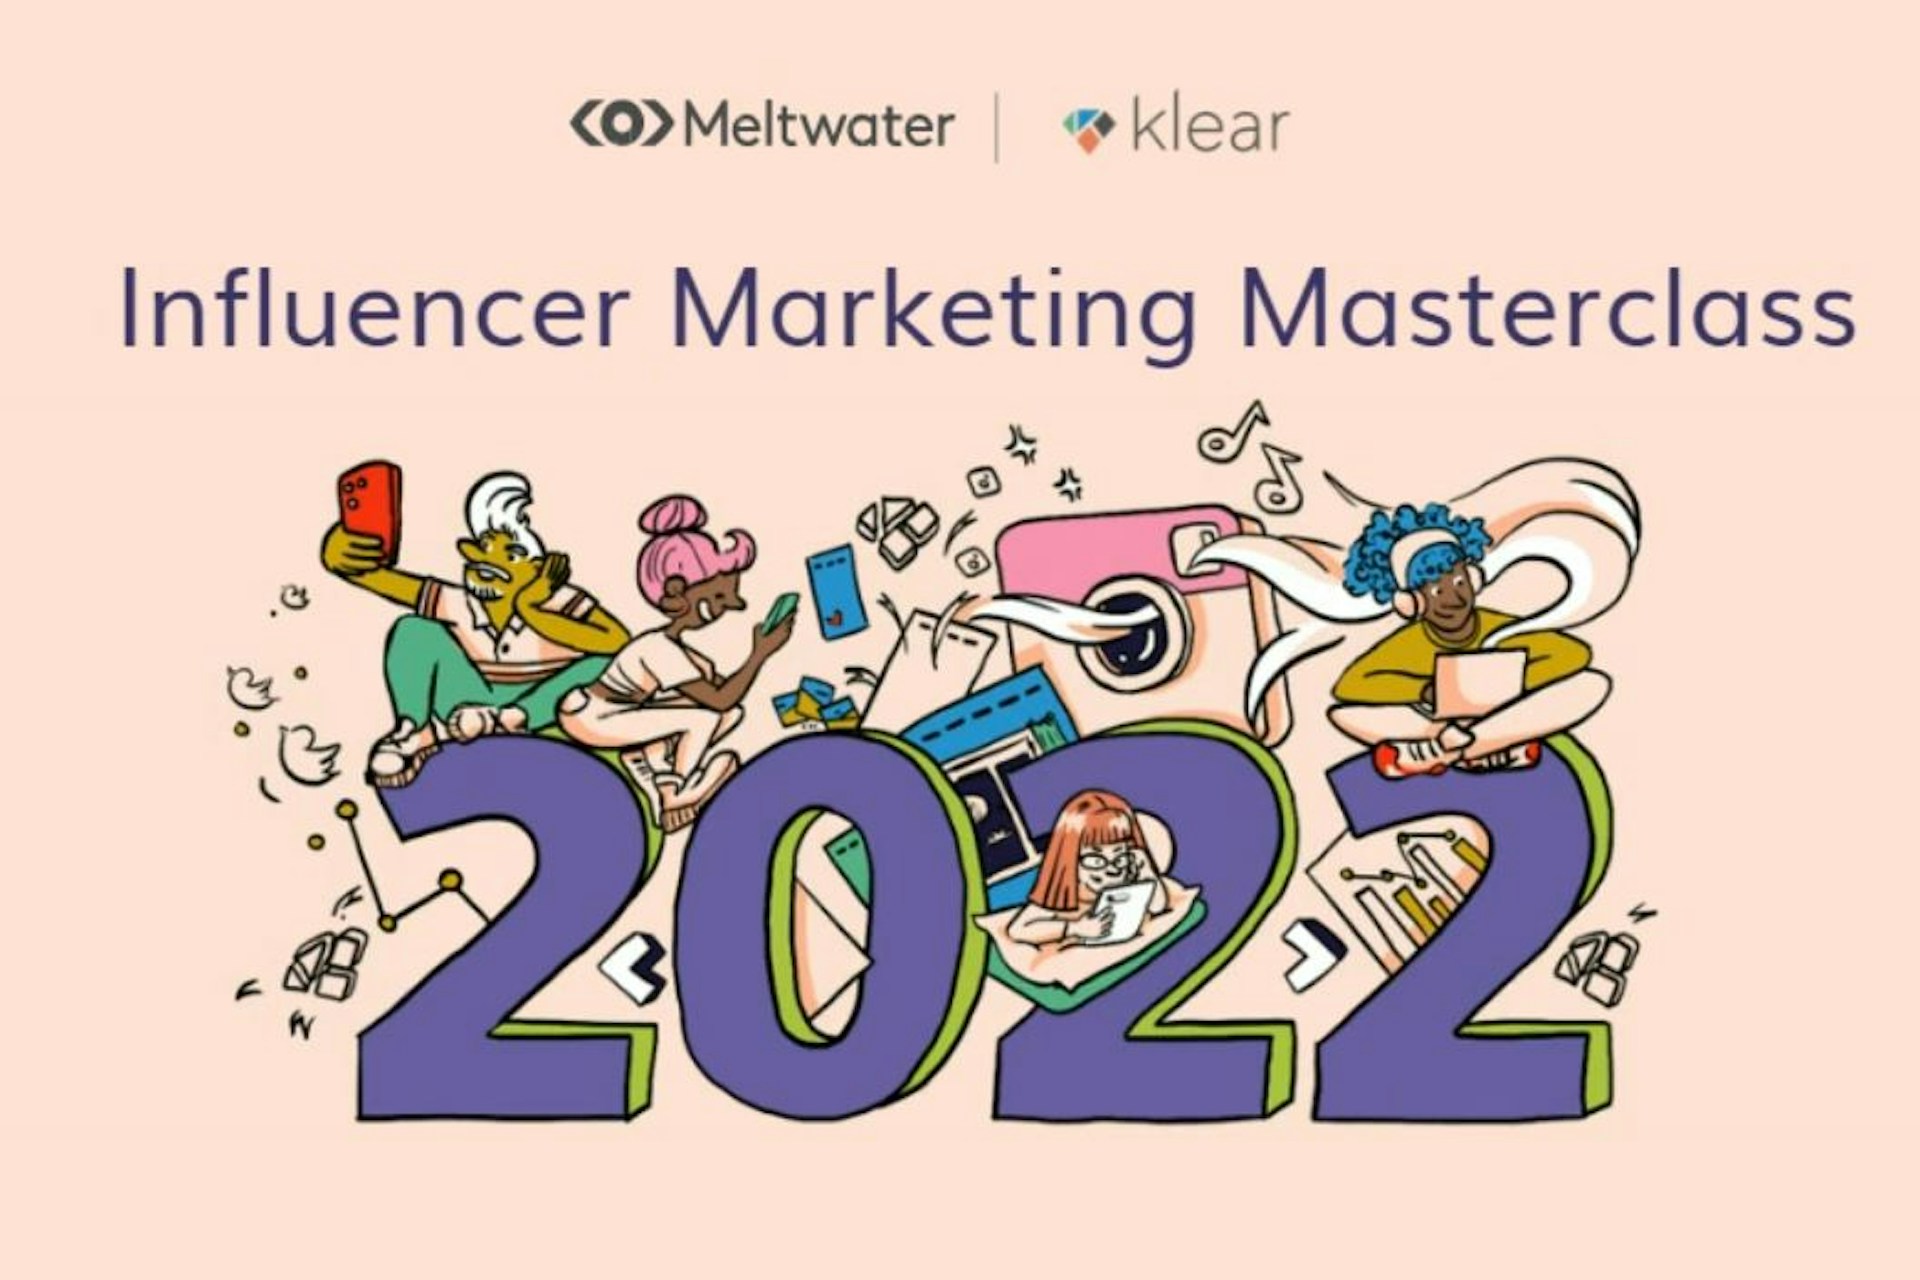 Influencer Marketing Masterclass 2022 with Klear